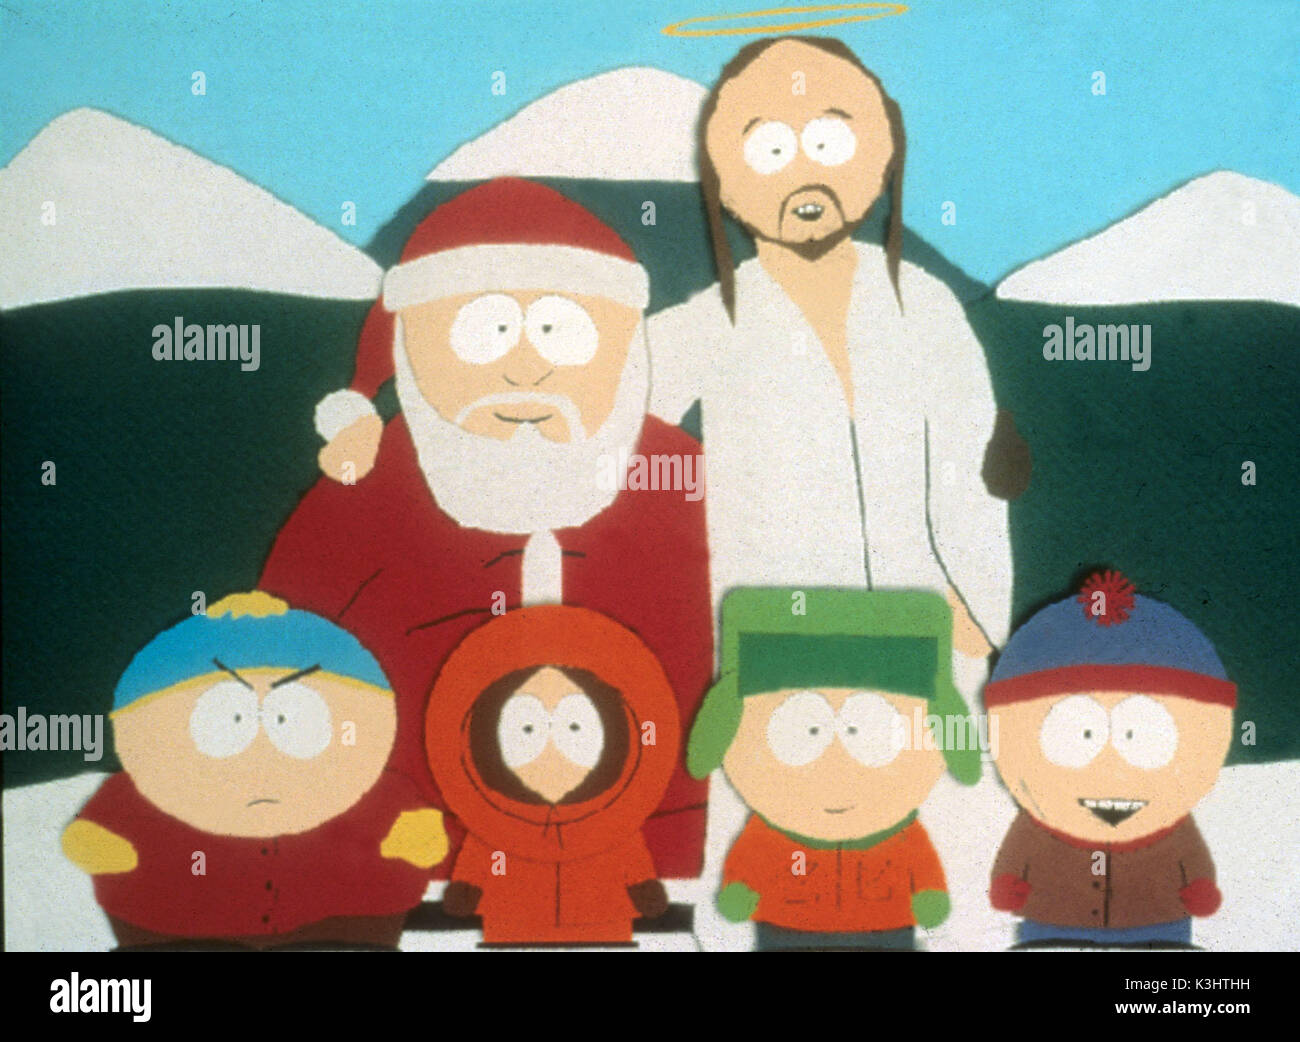 Cartman south park -Fotos und -Bildmaterial in hoher Auflösung – Alamy